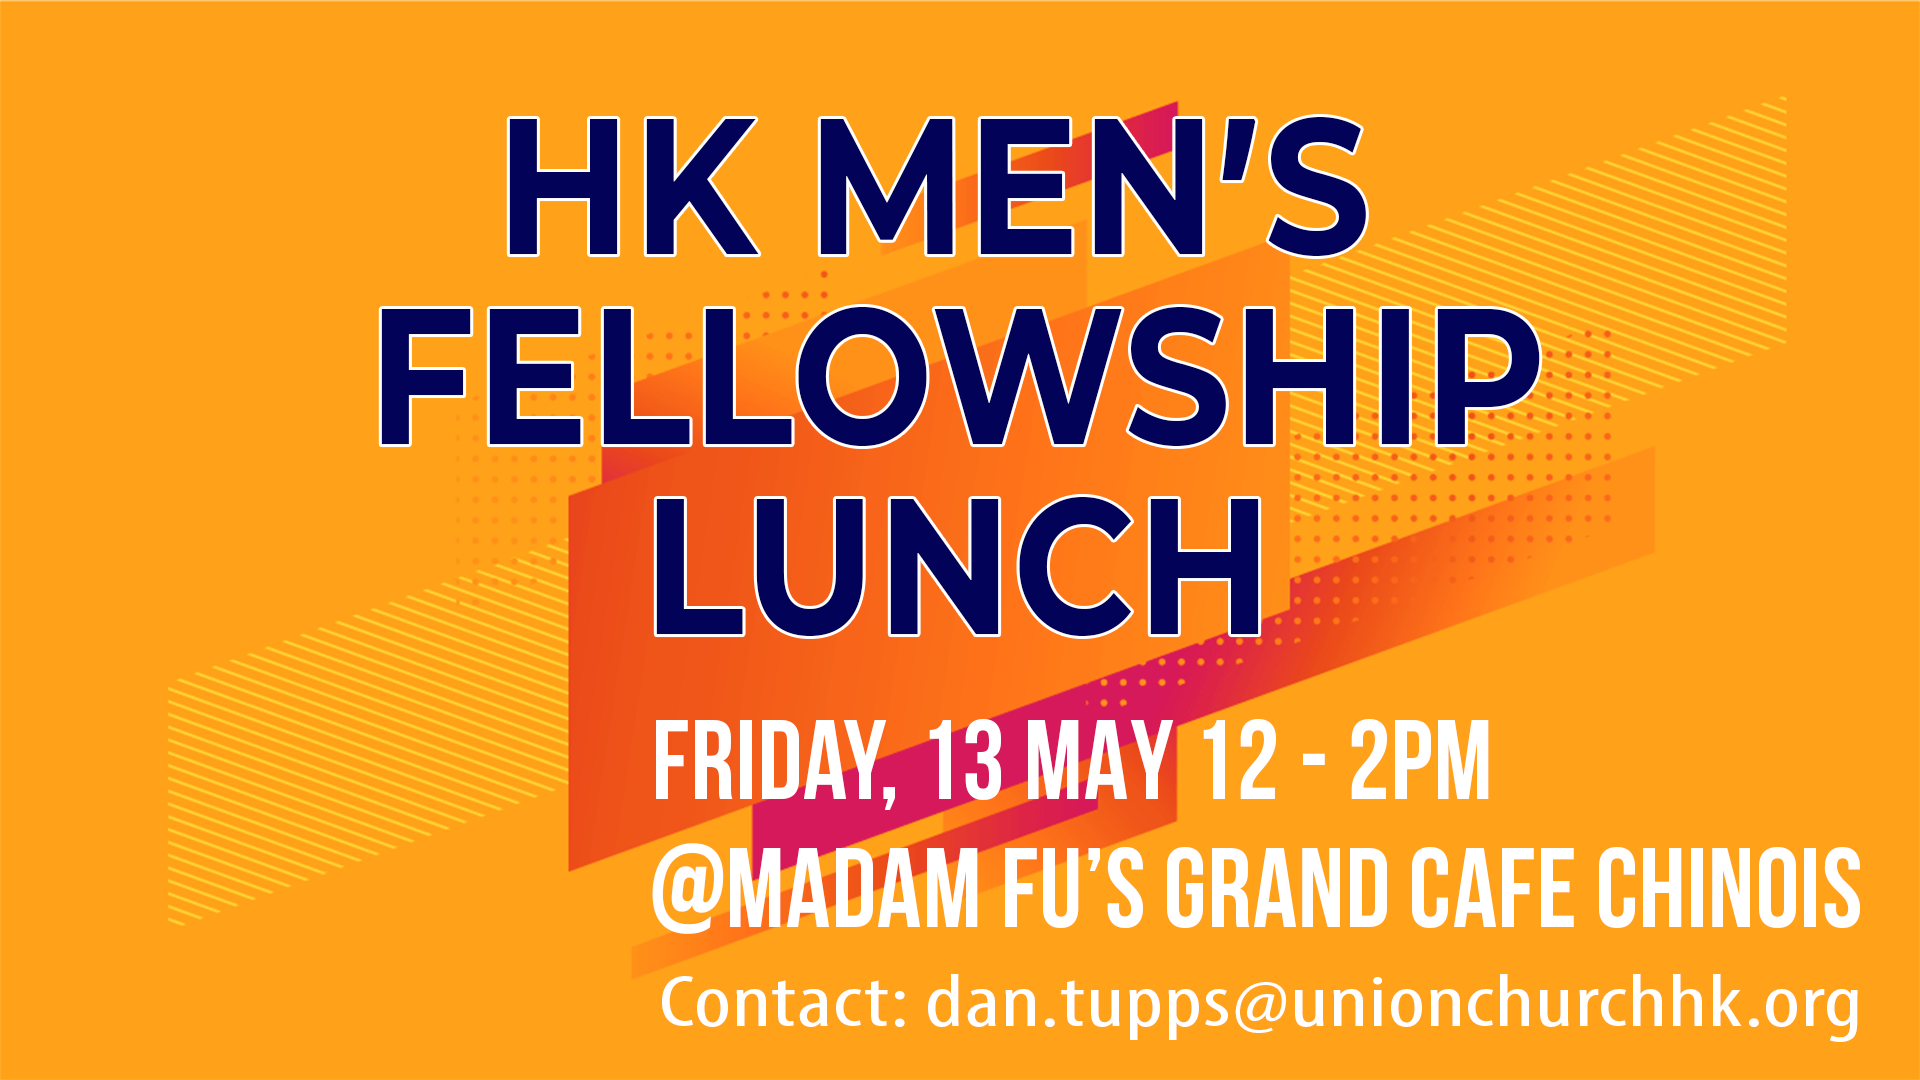 HK Men's Fellowship Lunch